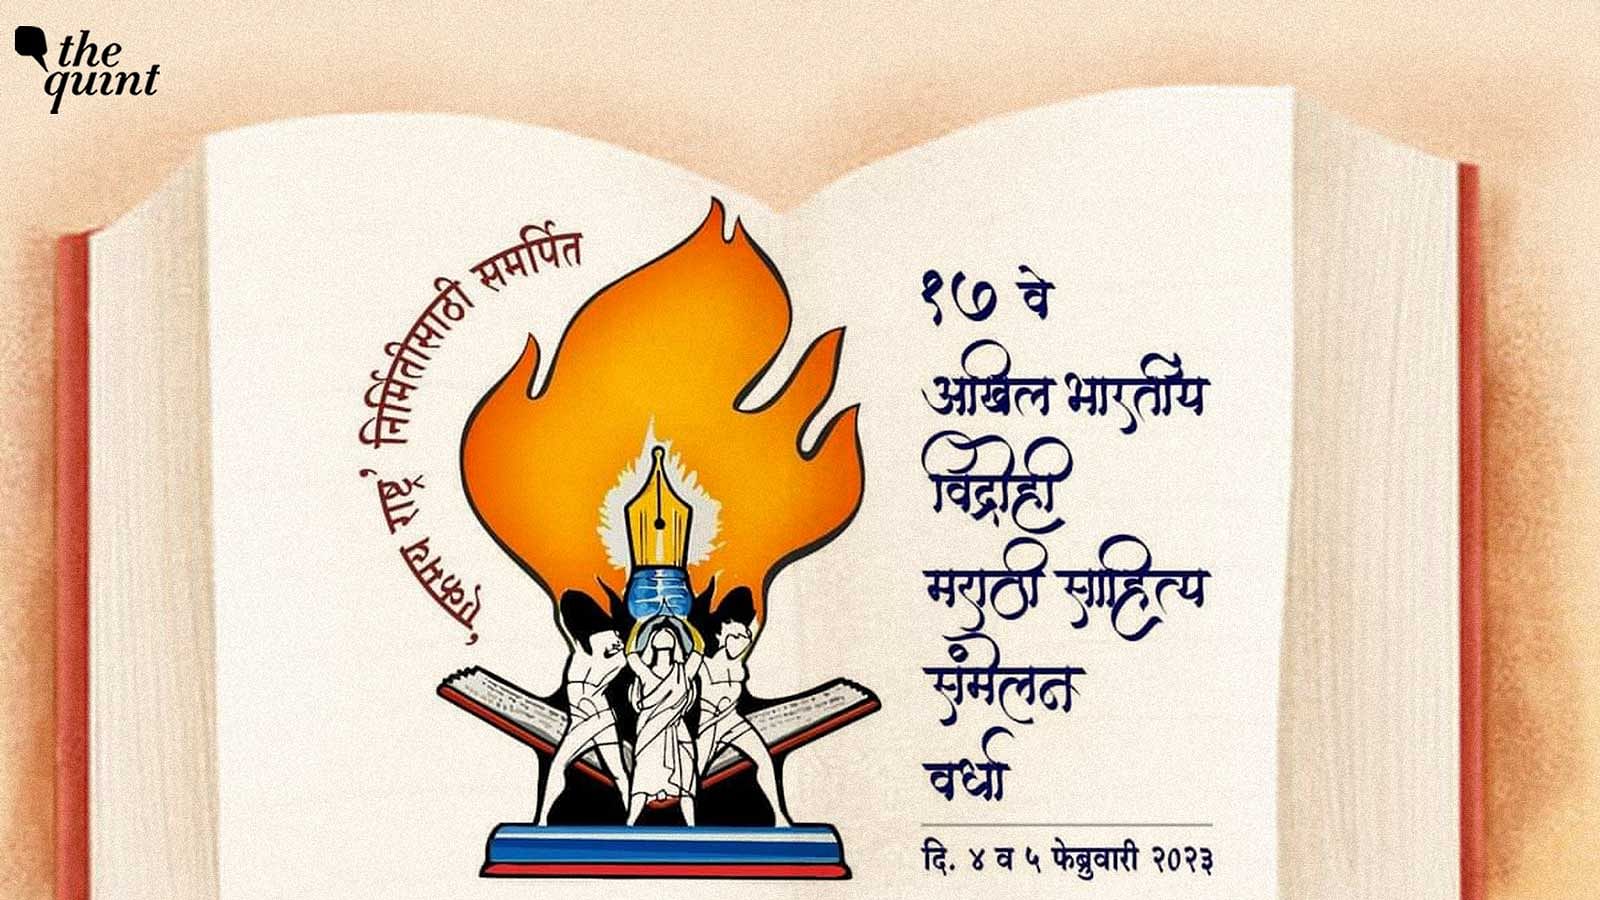 <div class="paragraphs"><p>The first vidrohi lit-fest was organised in 1999, as a protest against Akhil Bharatiya Marathi Sahitya Sammelan.</p></div>